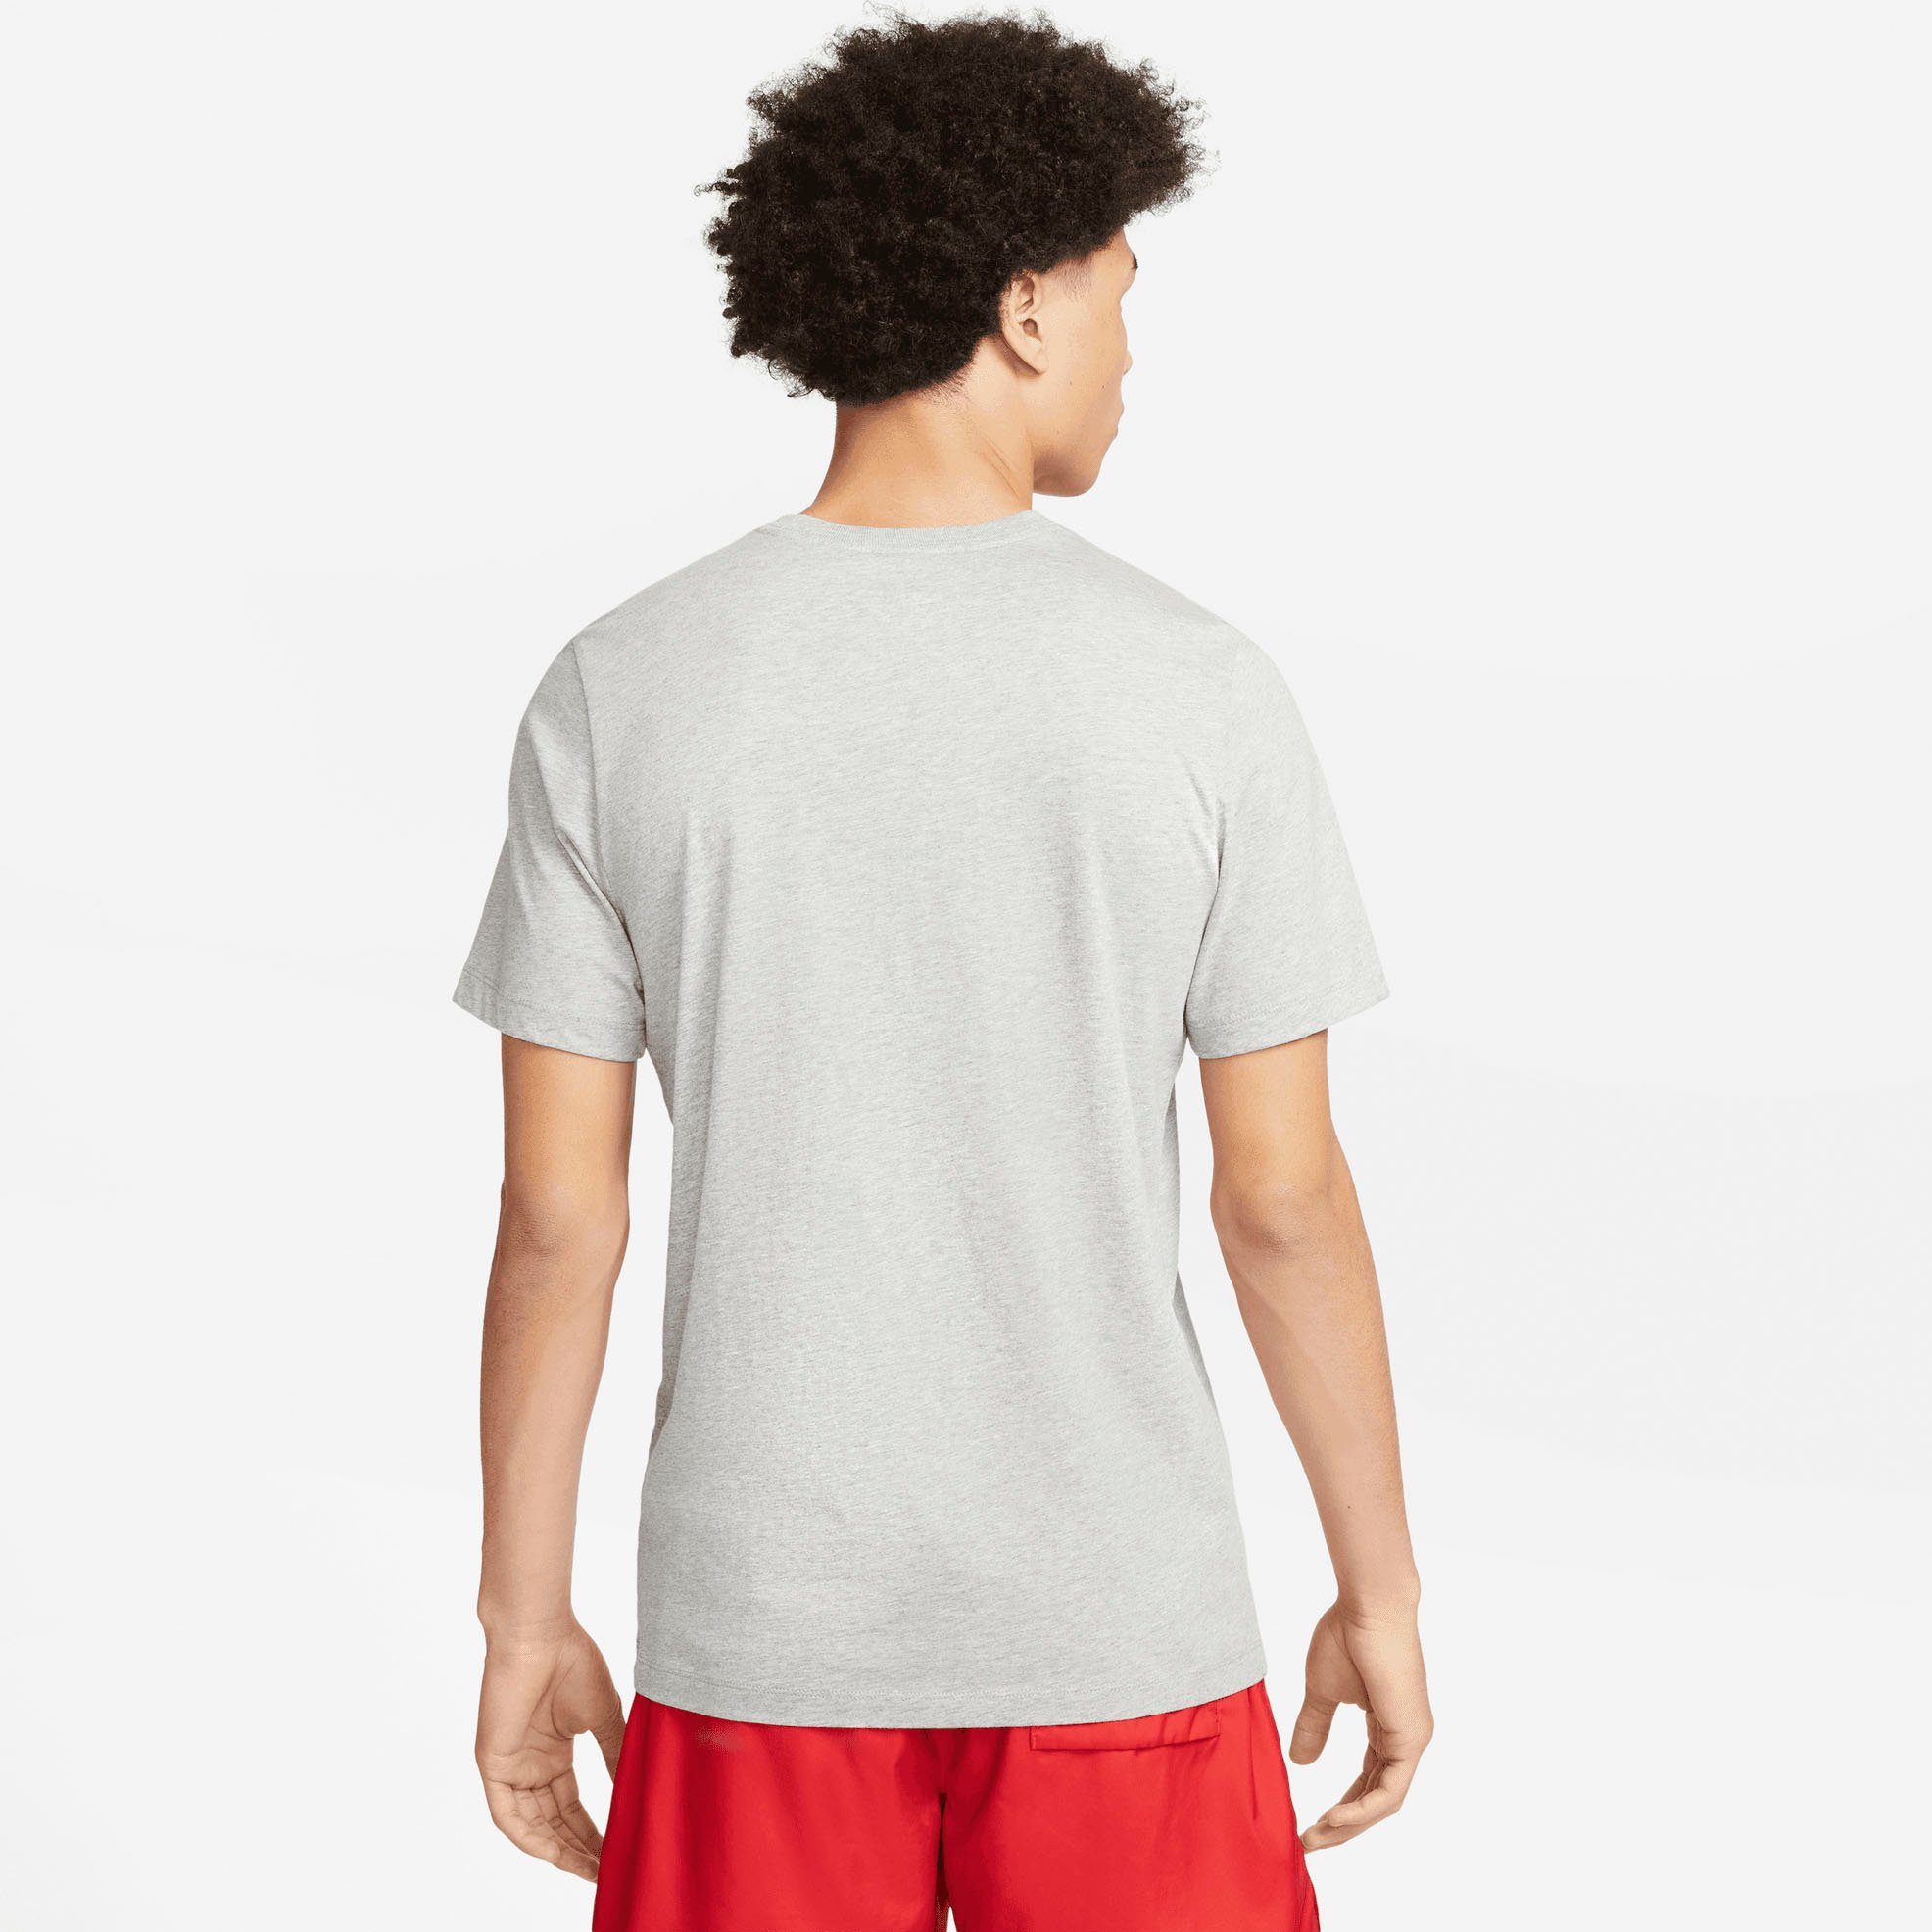 DK T-Shirt Nike Sportswear Men's T-Shirt HEATHER GREY